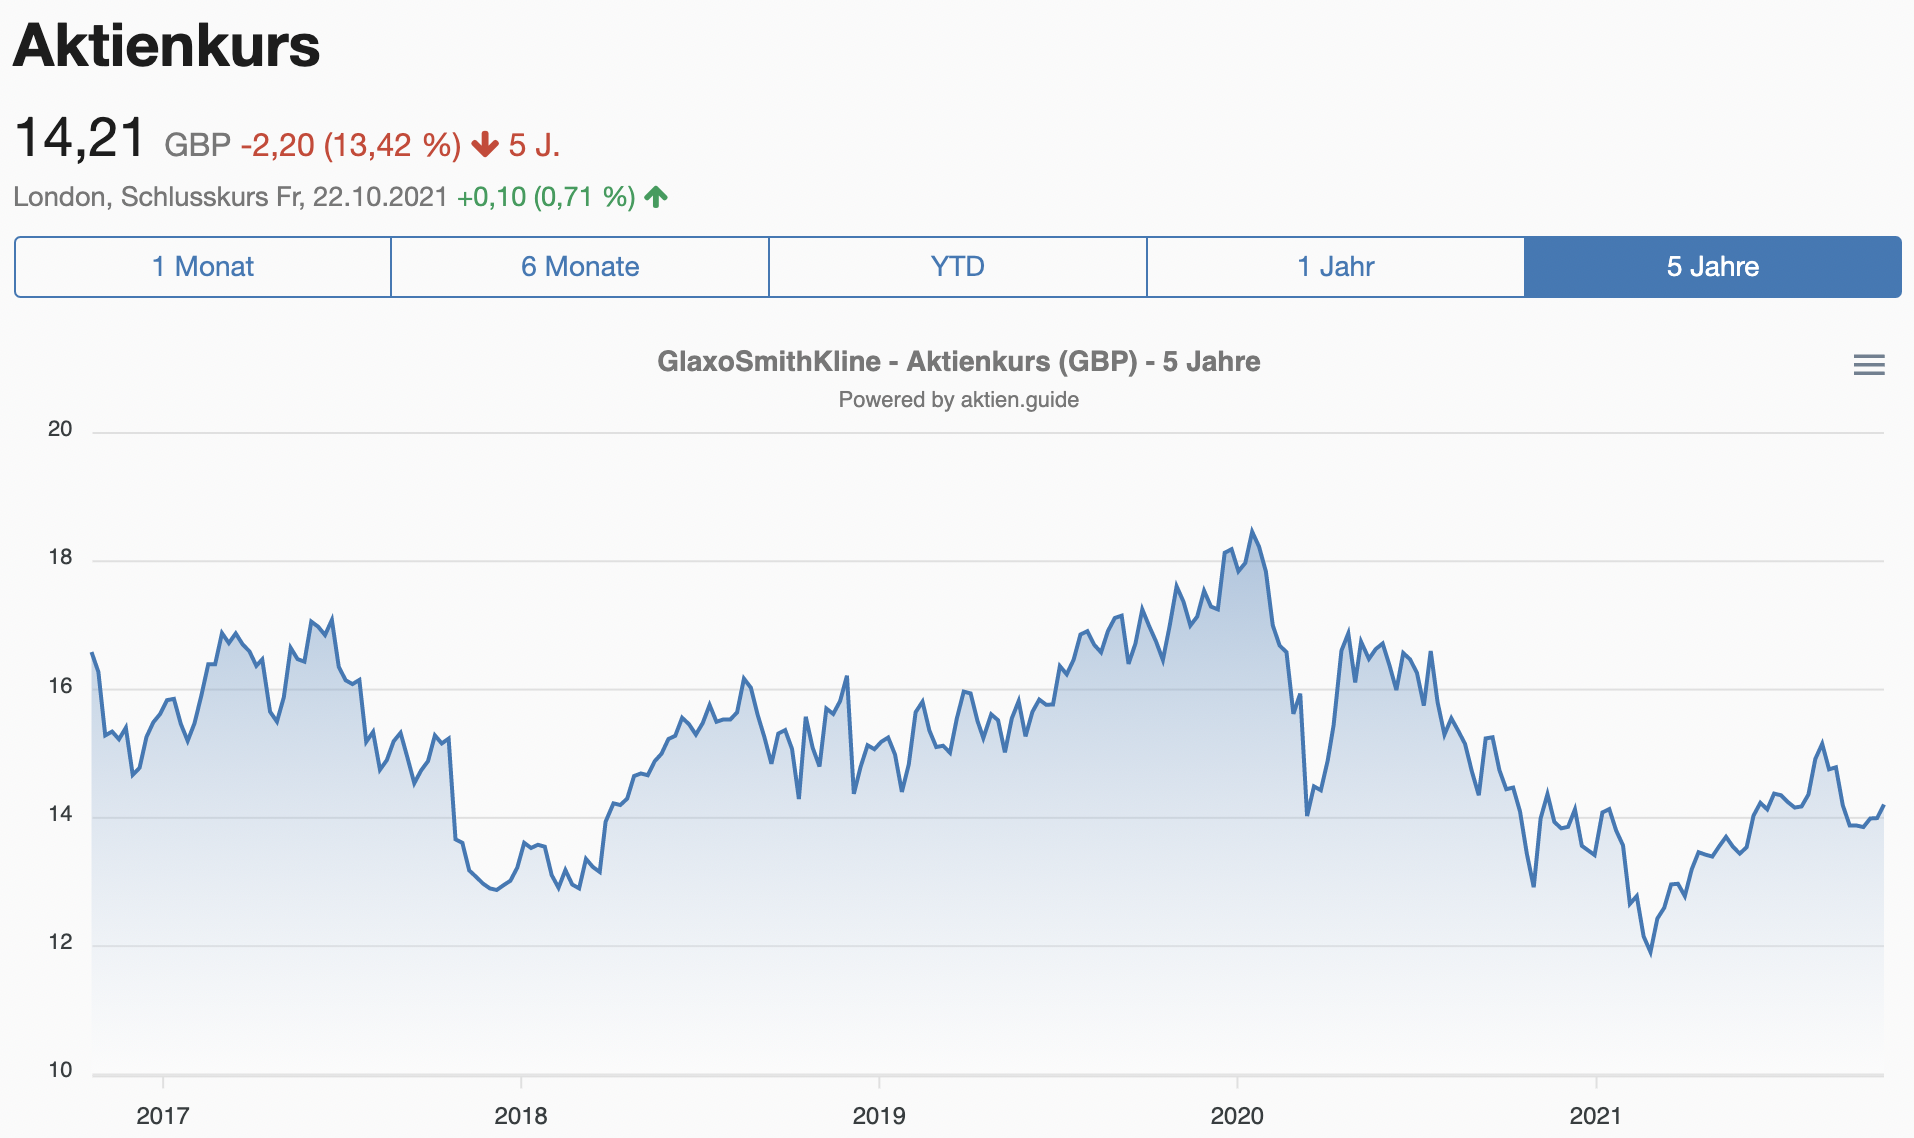 GlaxoSmithKline Aktienkursverlauf 5 Jahre